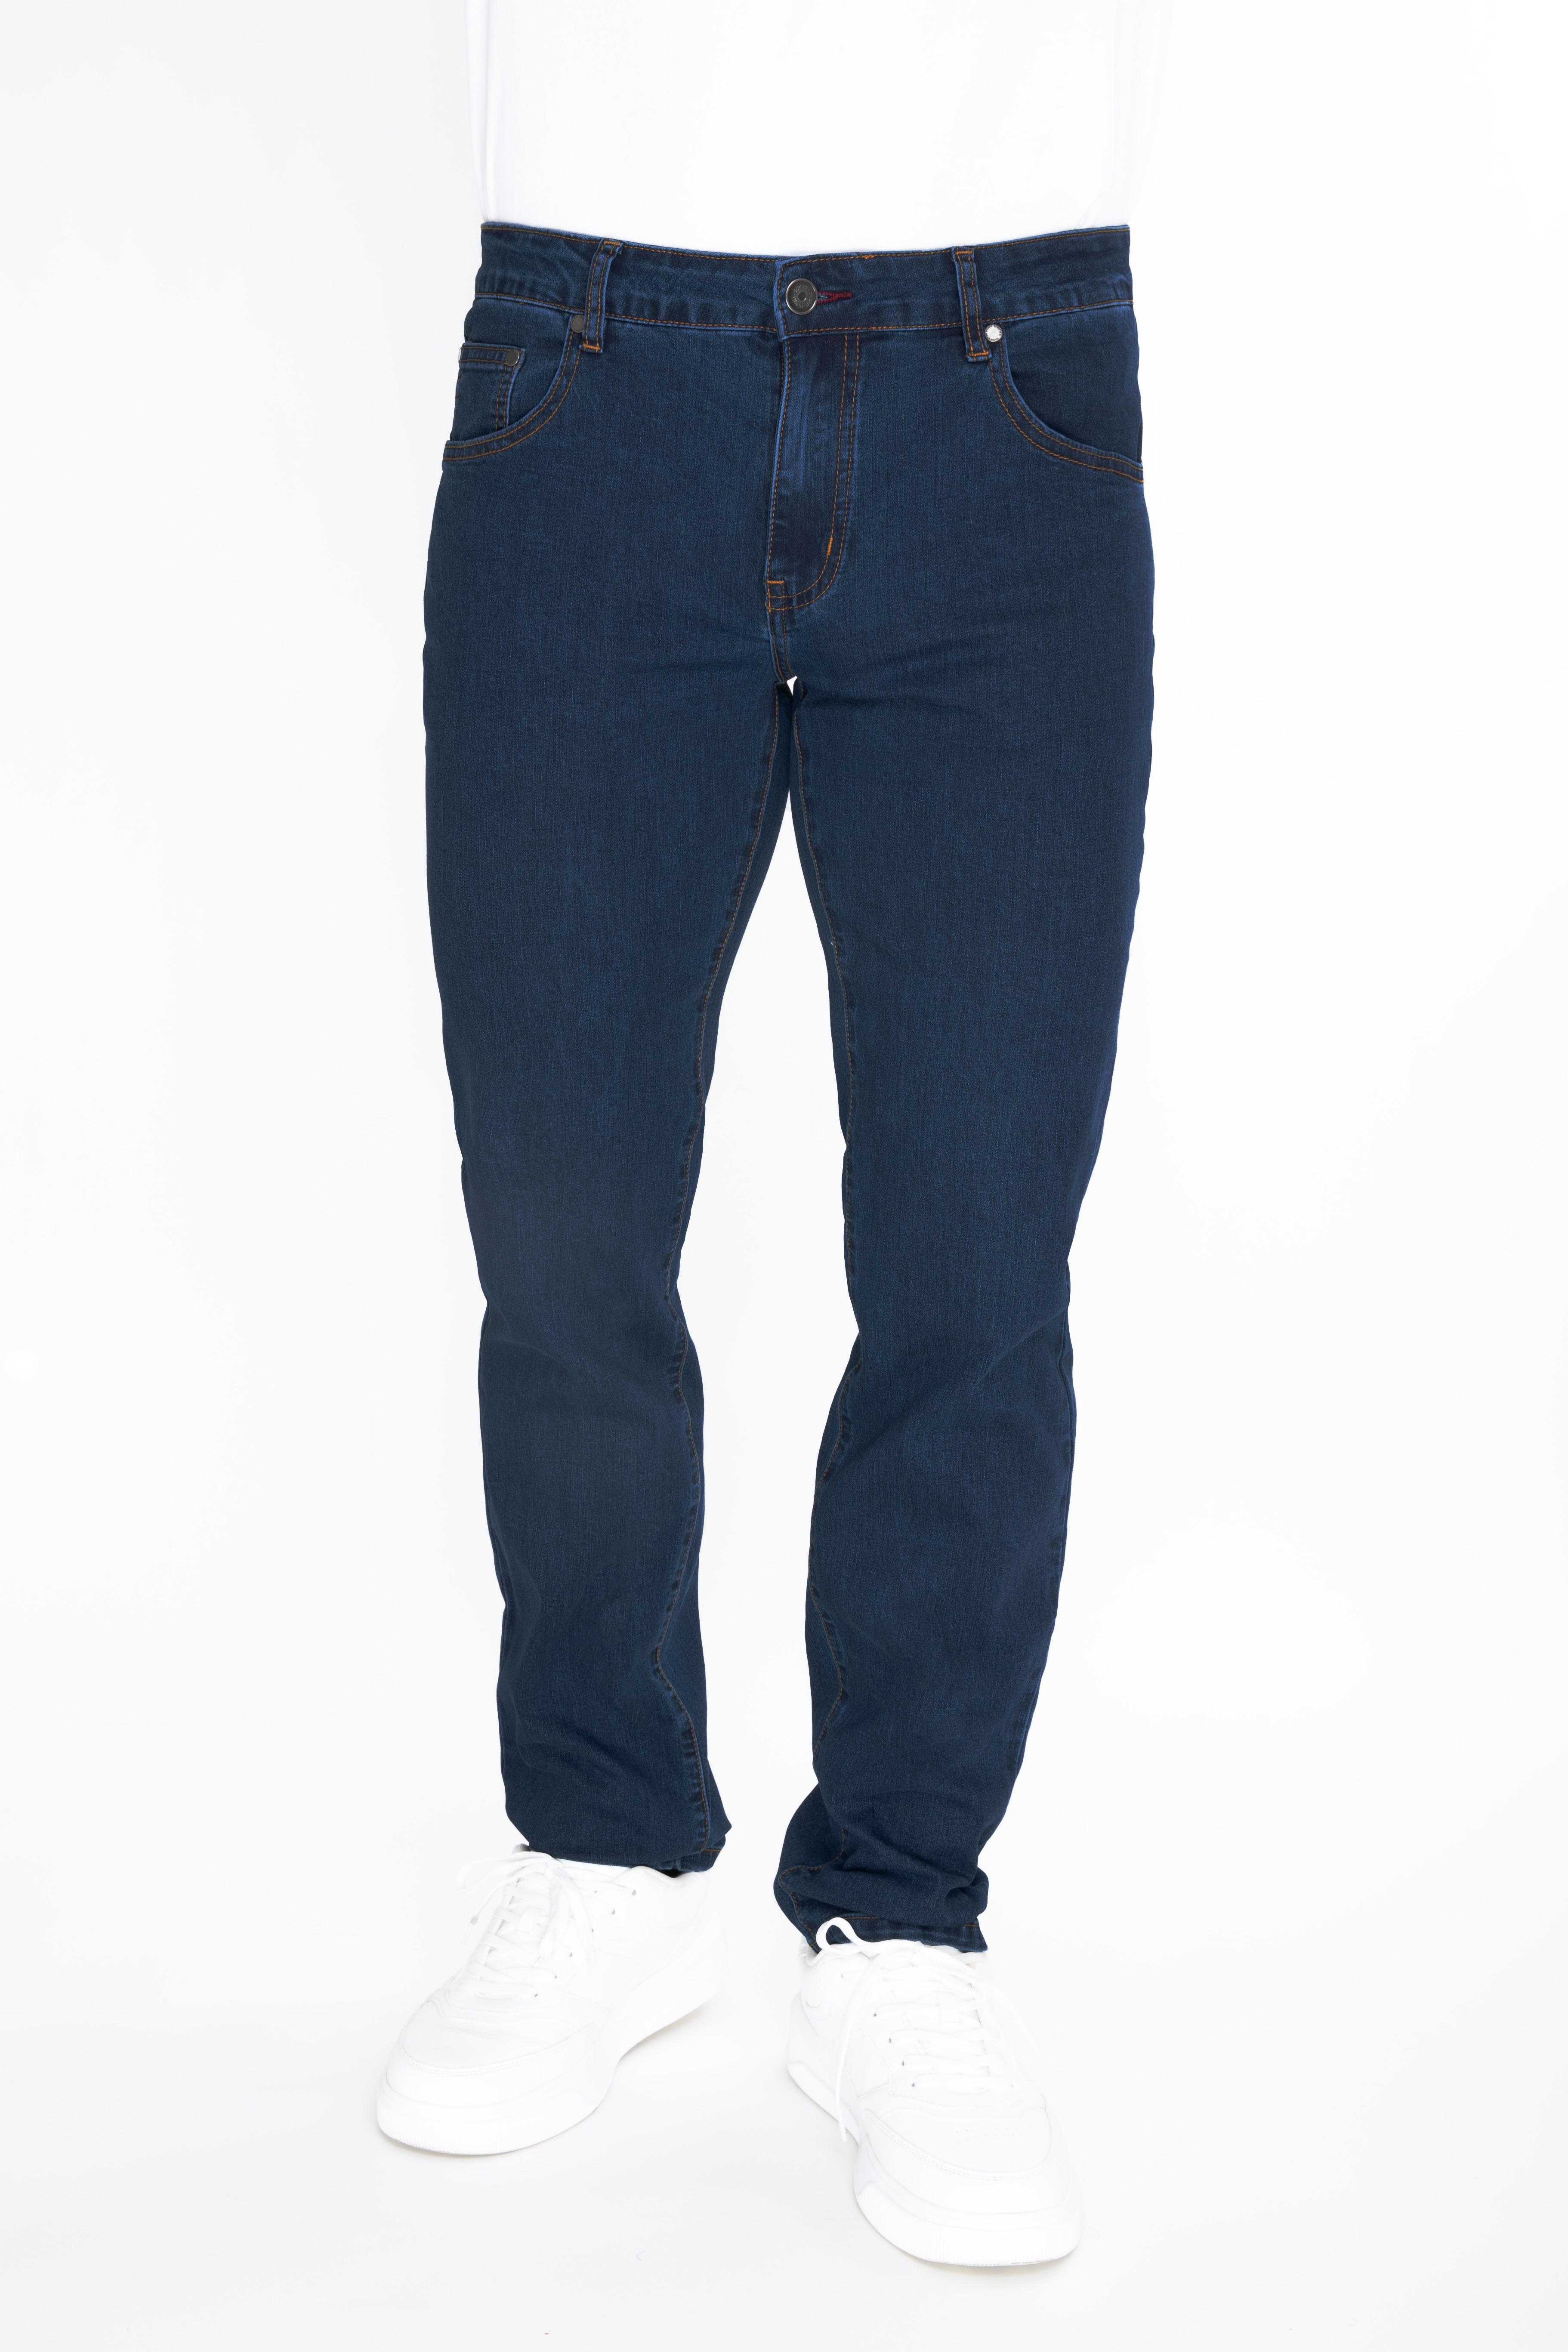 pantalon-jeans-oscar-p-caballeros